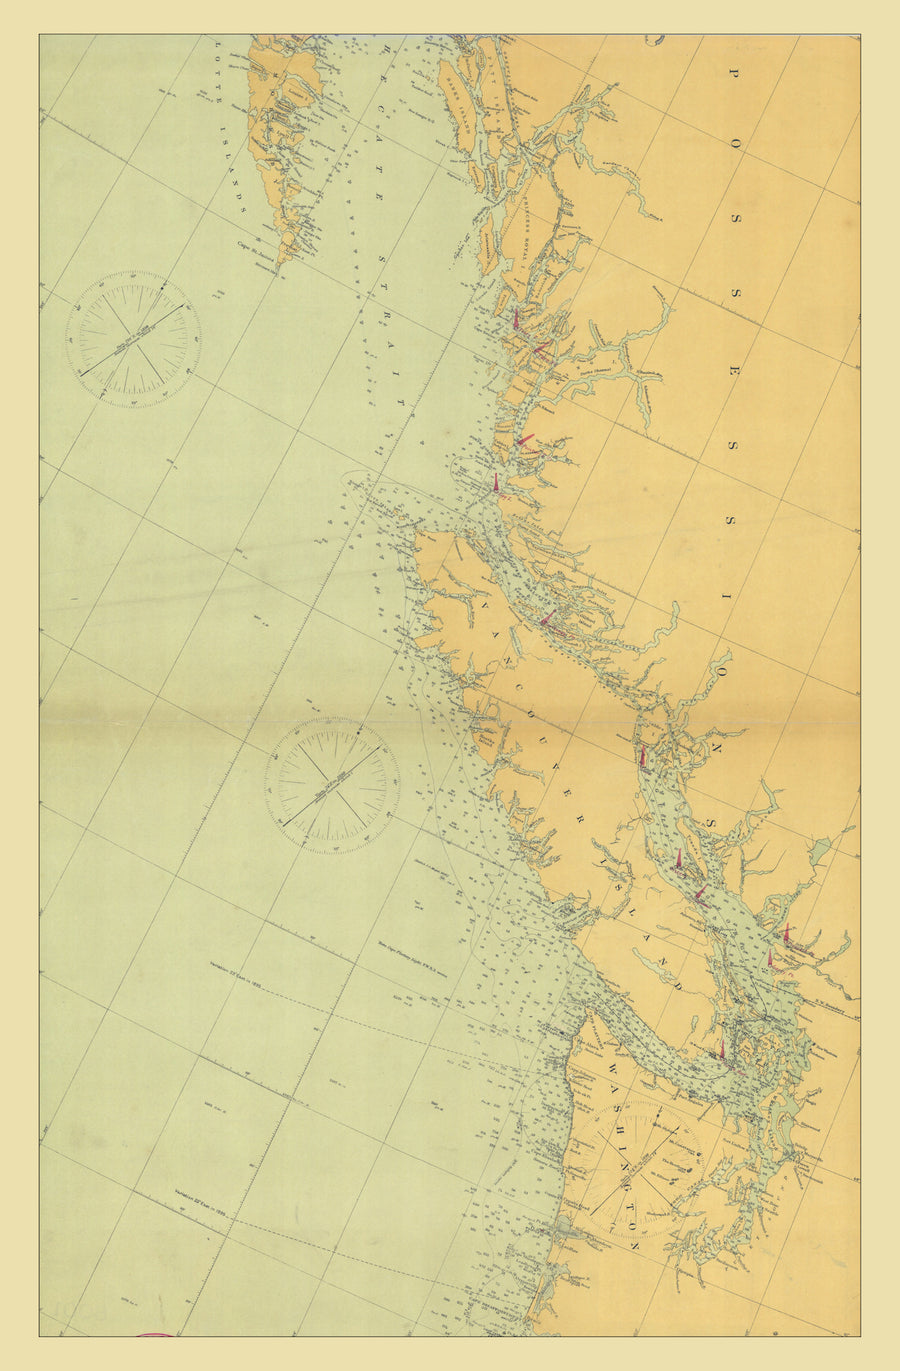 Vancouver Island Map - 1898